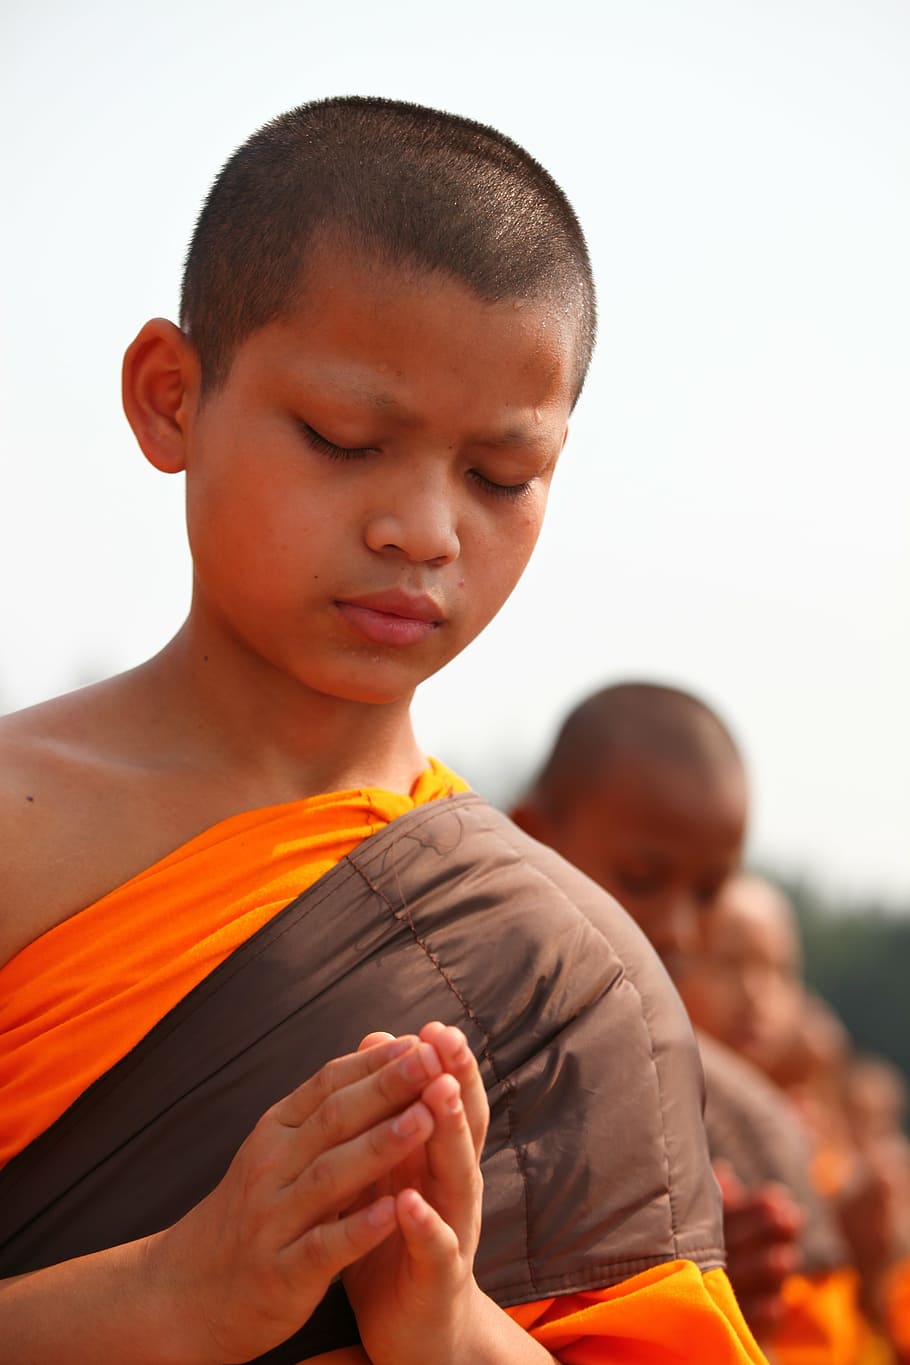 budistas, monjes, niño, oración, budismo, orando, caminar, naranja, túnicas, tailandés